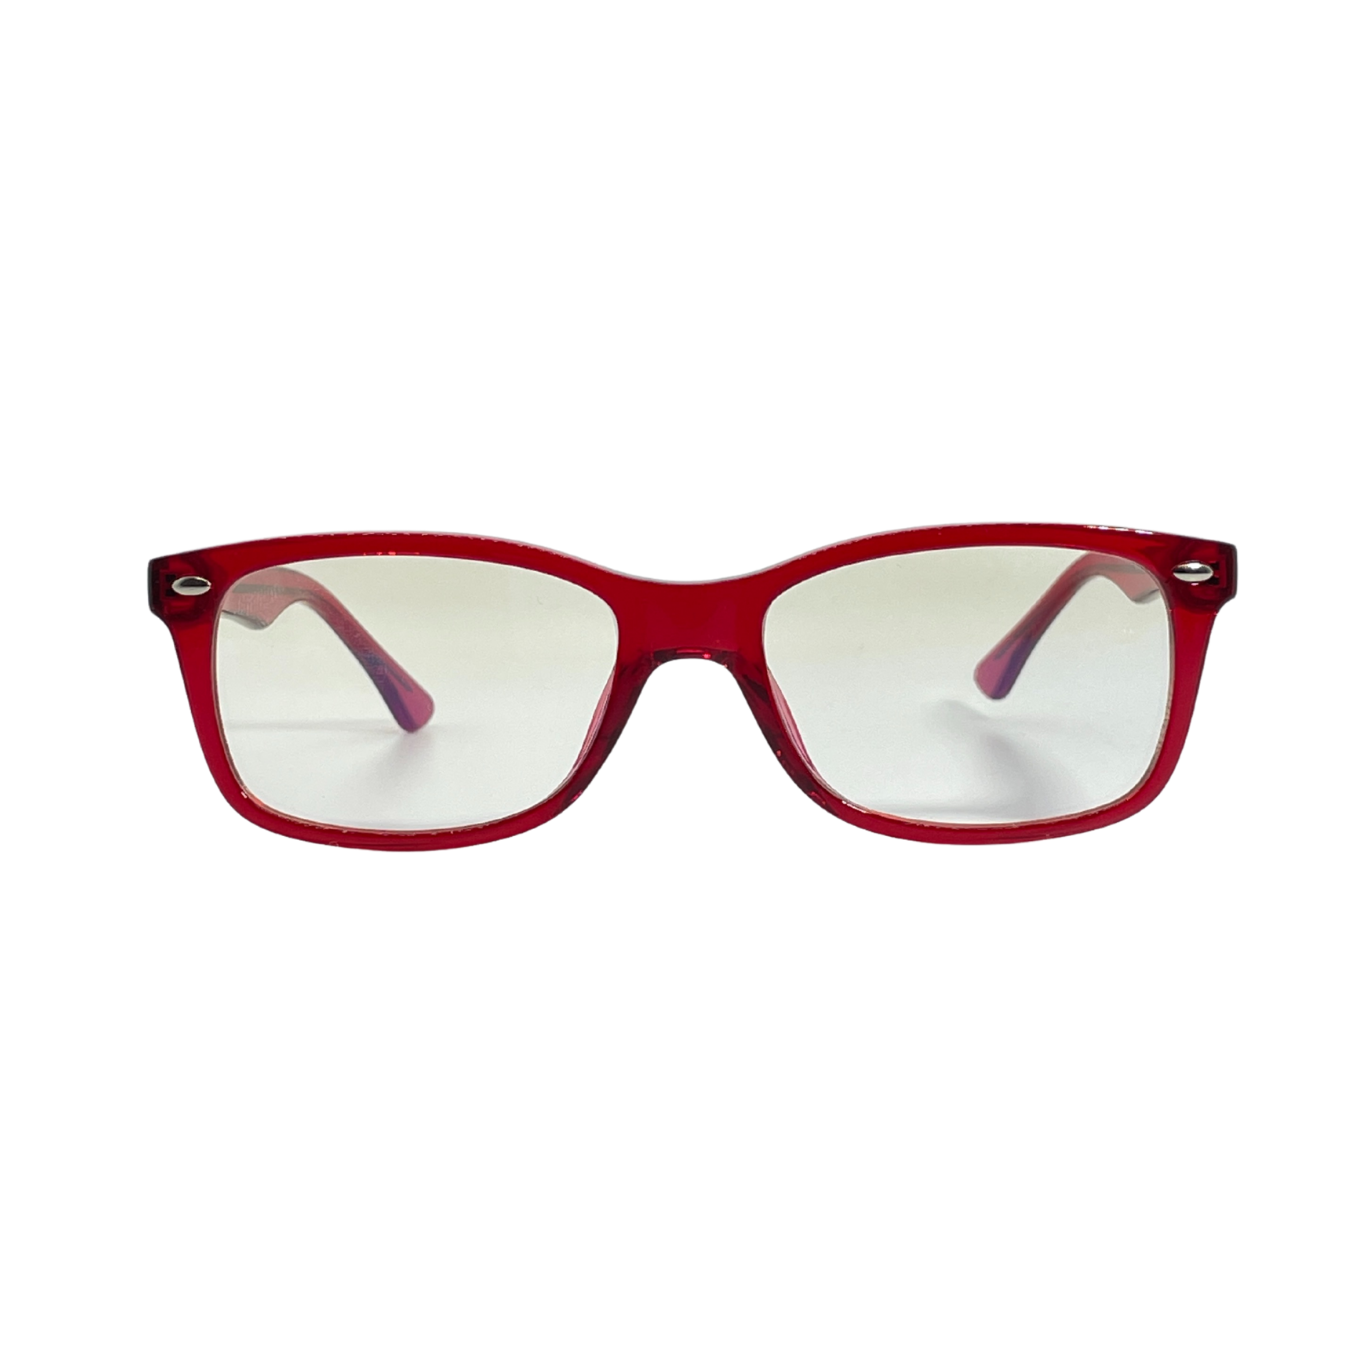 Trocadero II  Blue Light Glasses - Woodensun Sunglasses | Eco-fashion eyewear